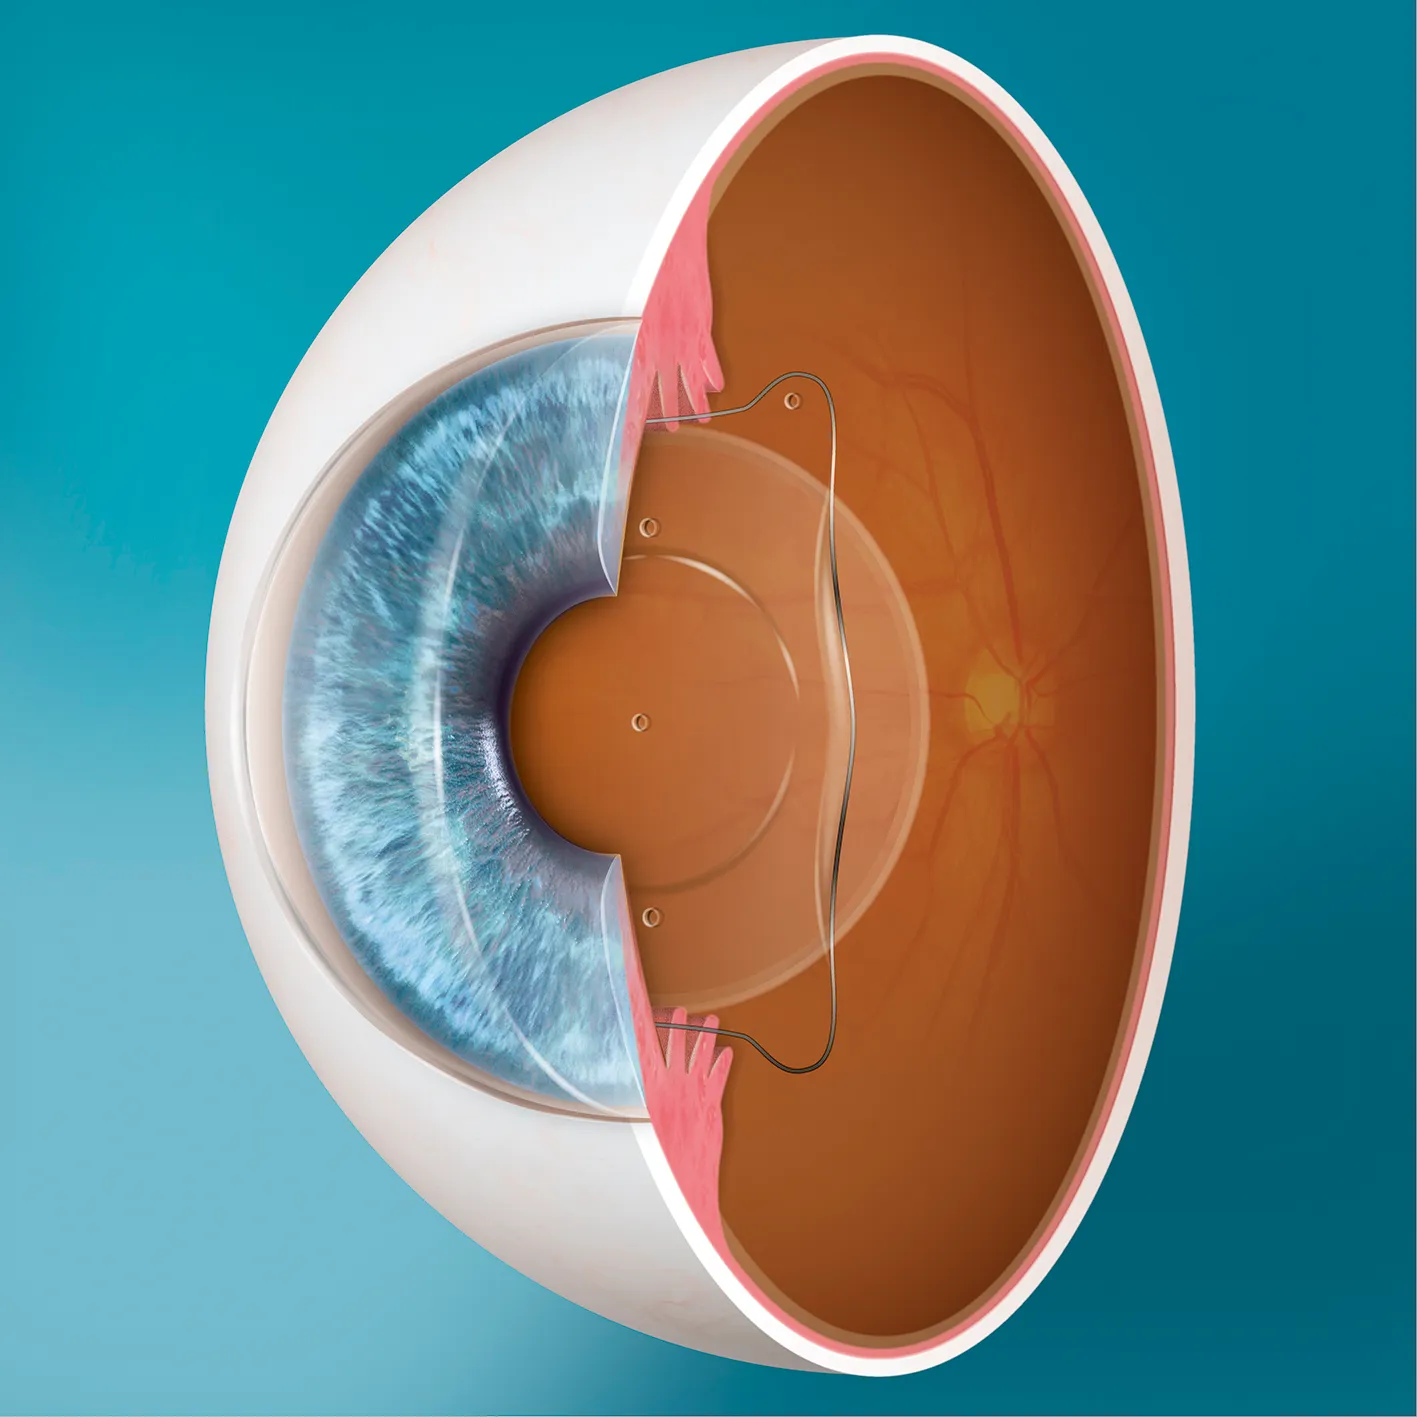 ICL近視矯正手術の説明画像